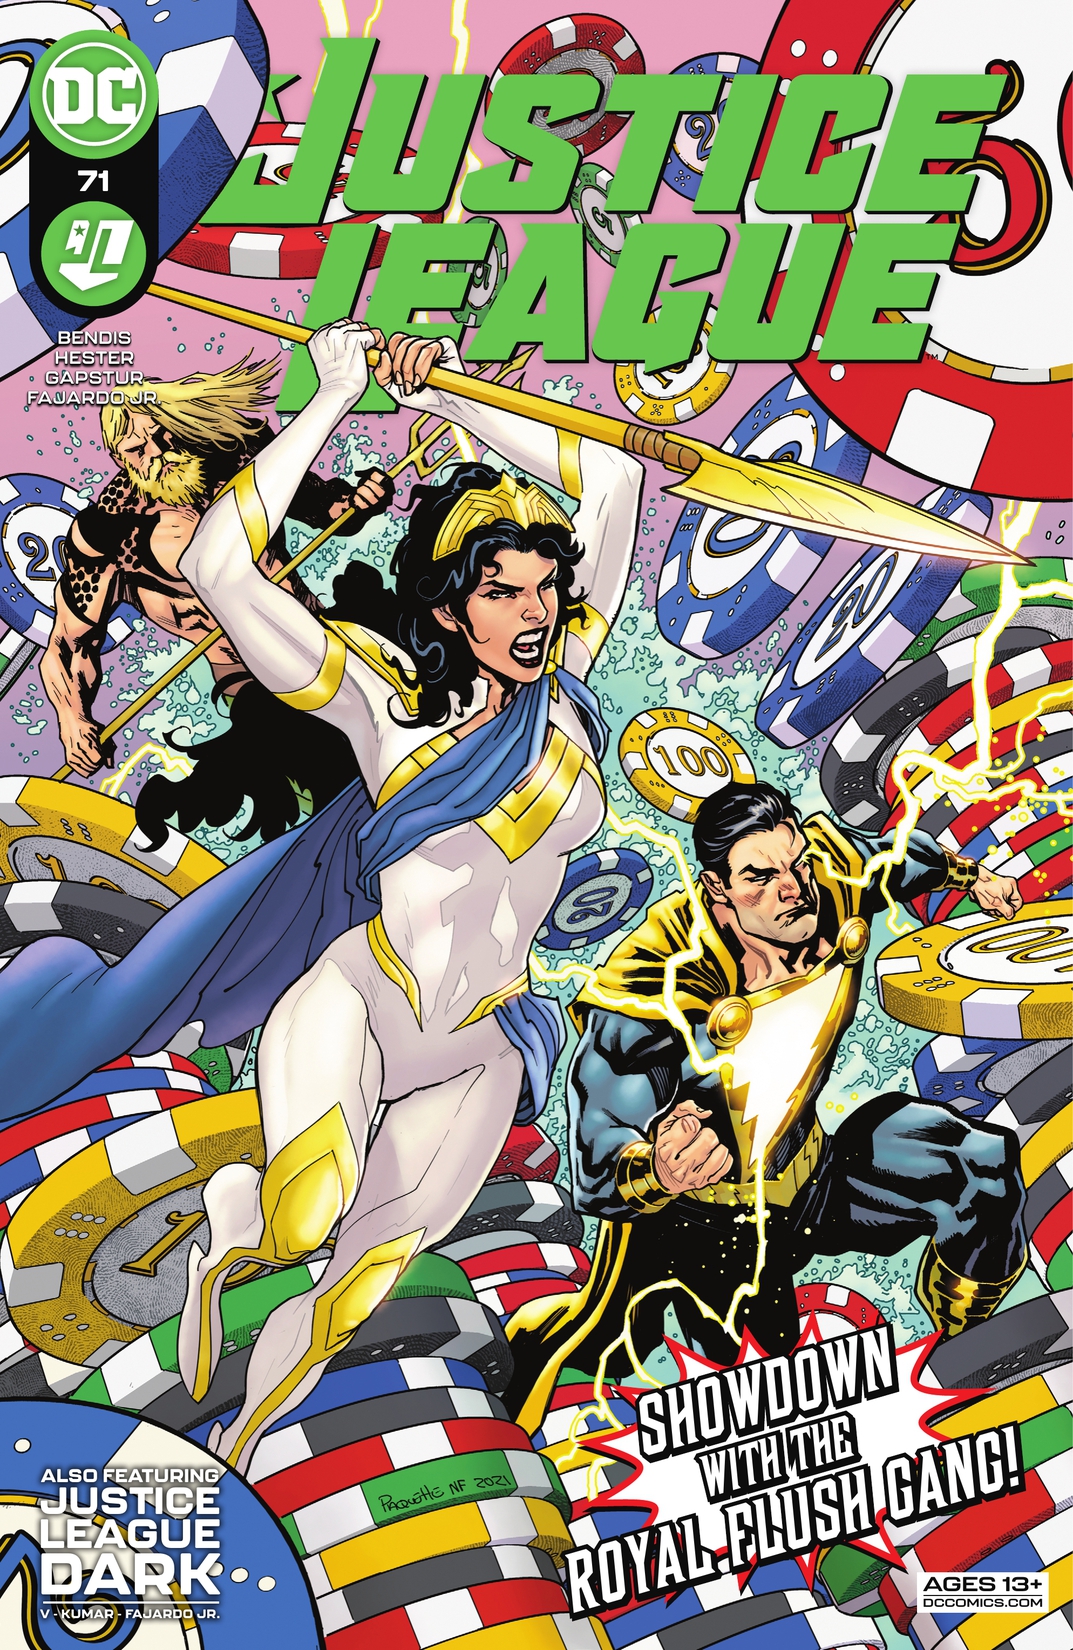 Justice League (2018-) #71 preview images